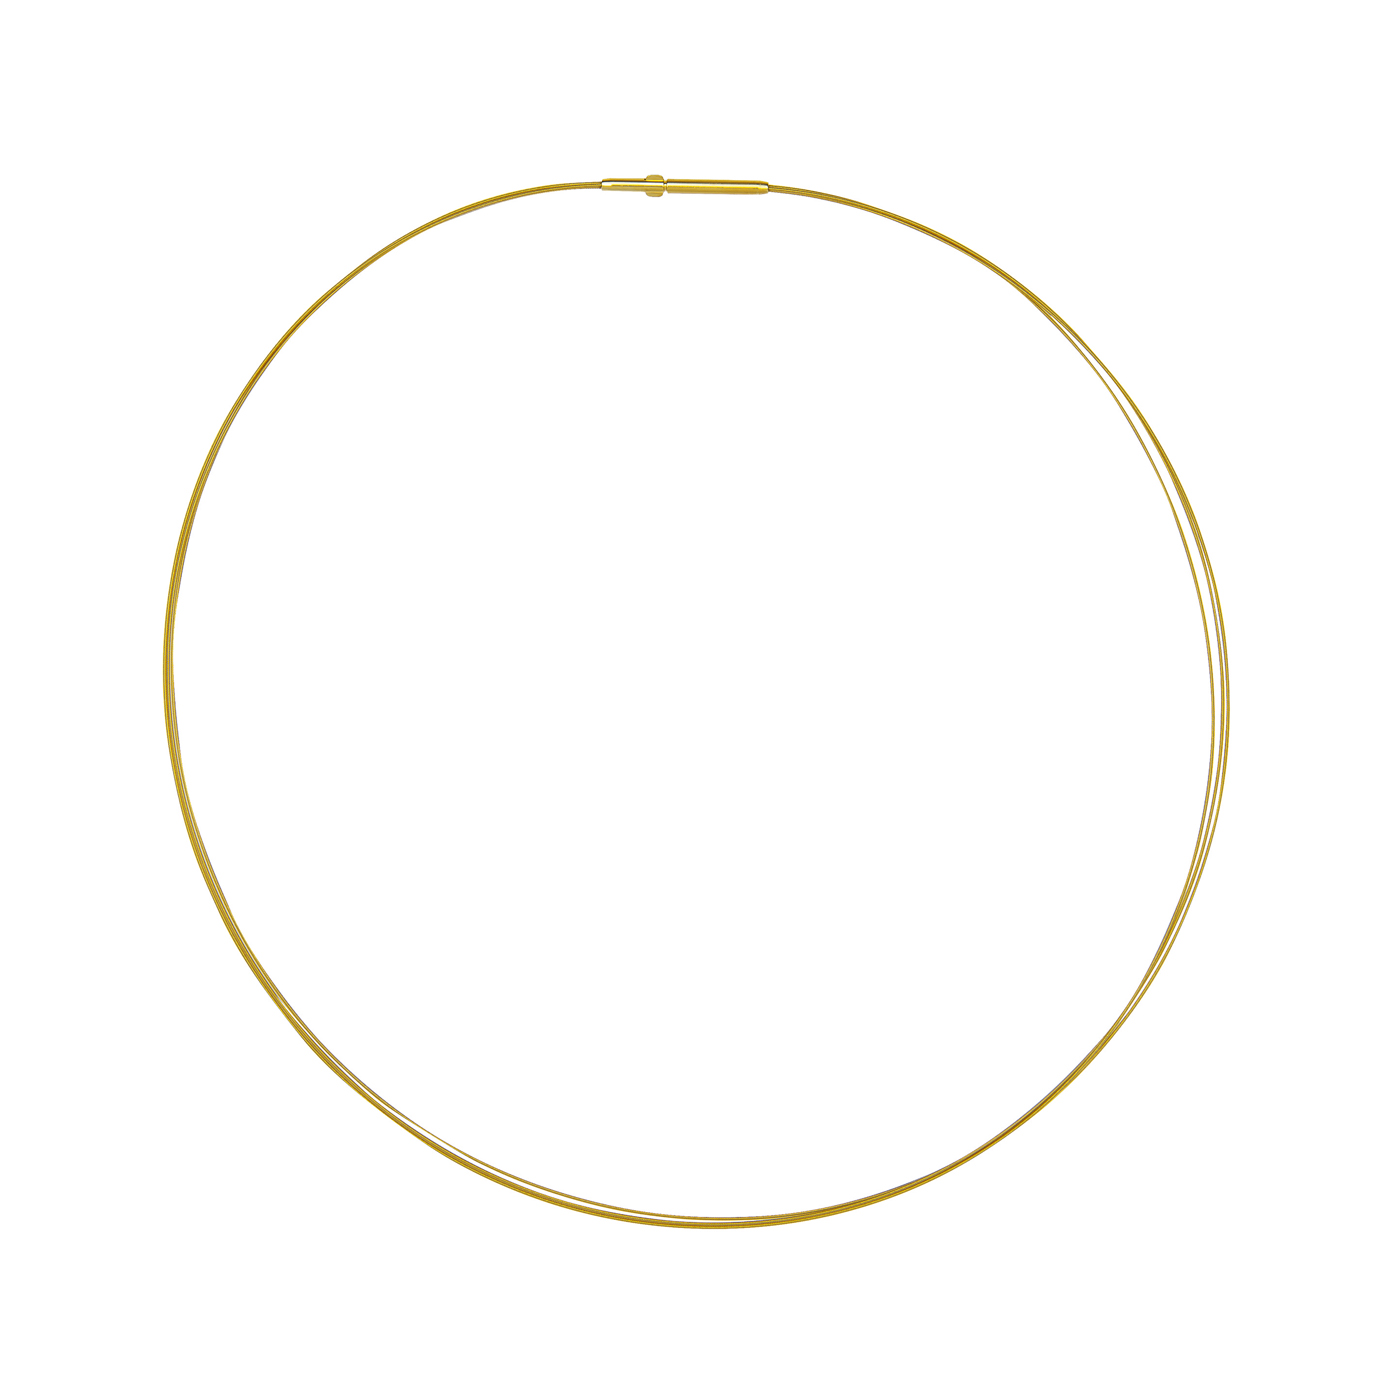 Spiral Necklace,St. Steel Gd.-Pl.,ø 0.5mm,Clip Closure,45 cm - 1 piece